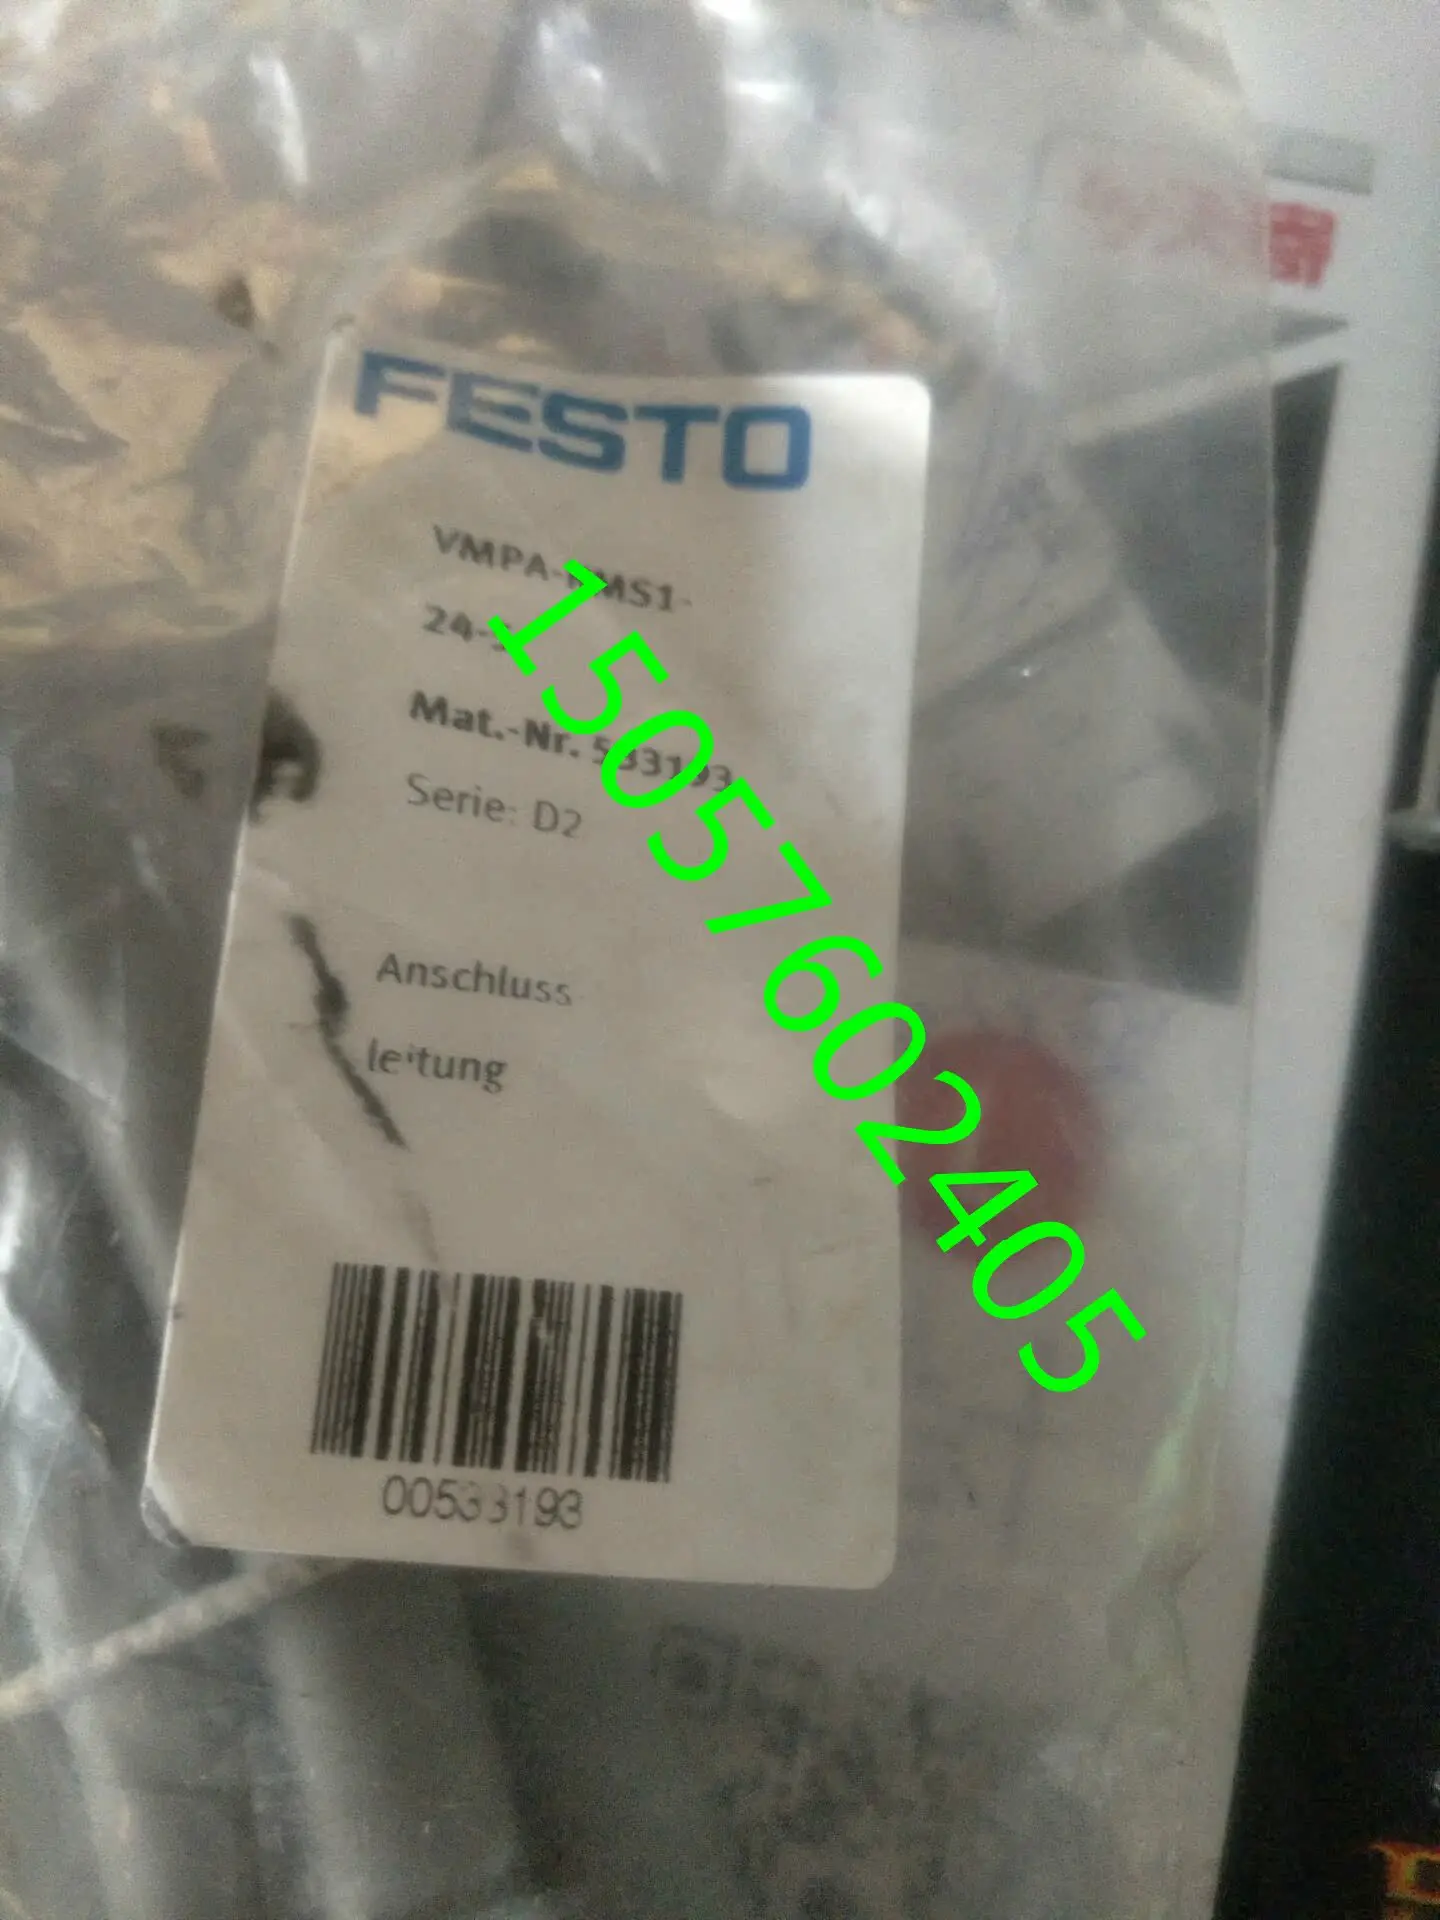 

German Original Festo FESTO 533193 Connecting Cable VMPA-KMS1-24-5 In Stock